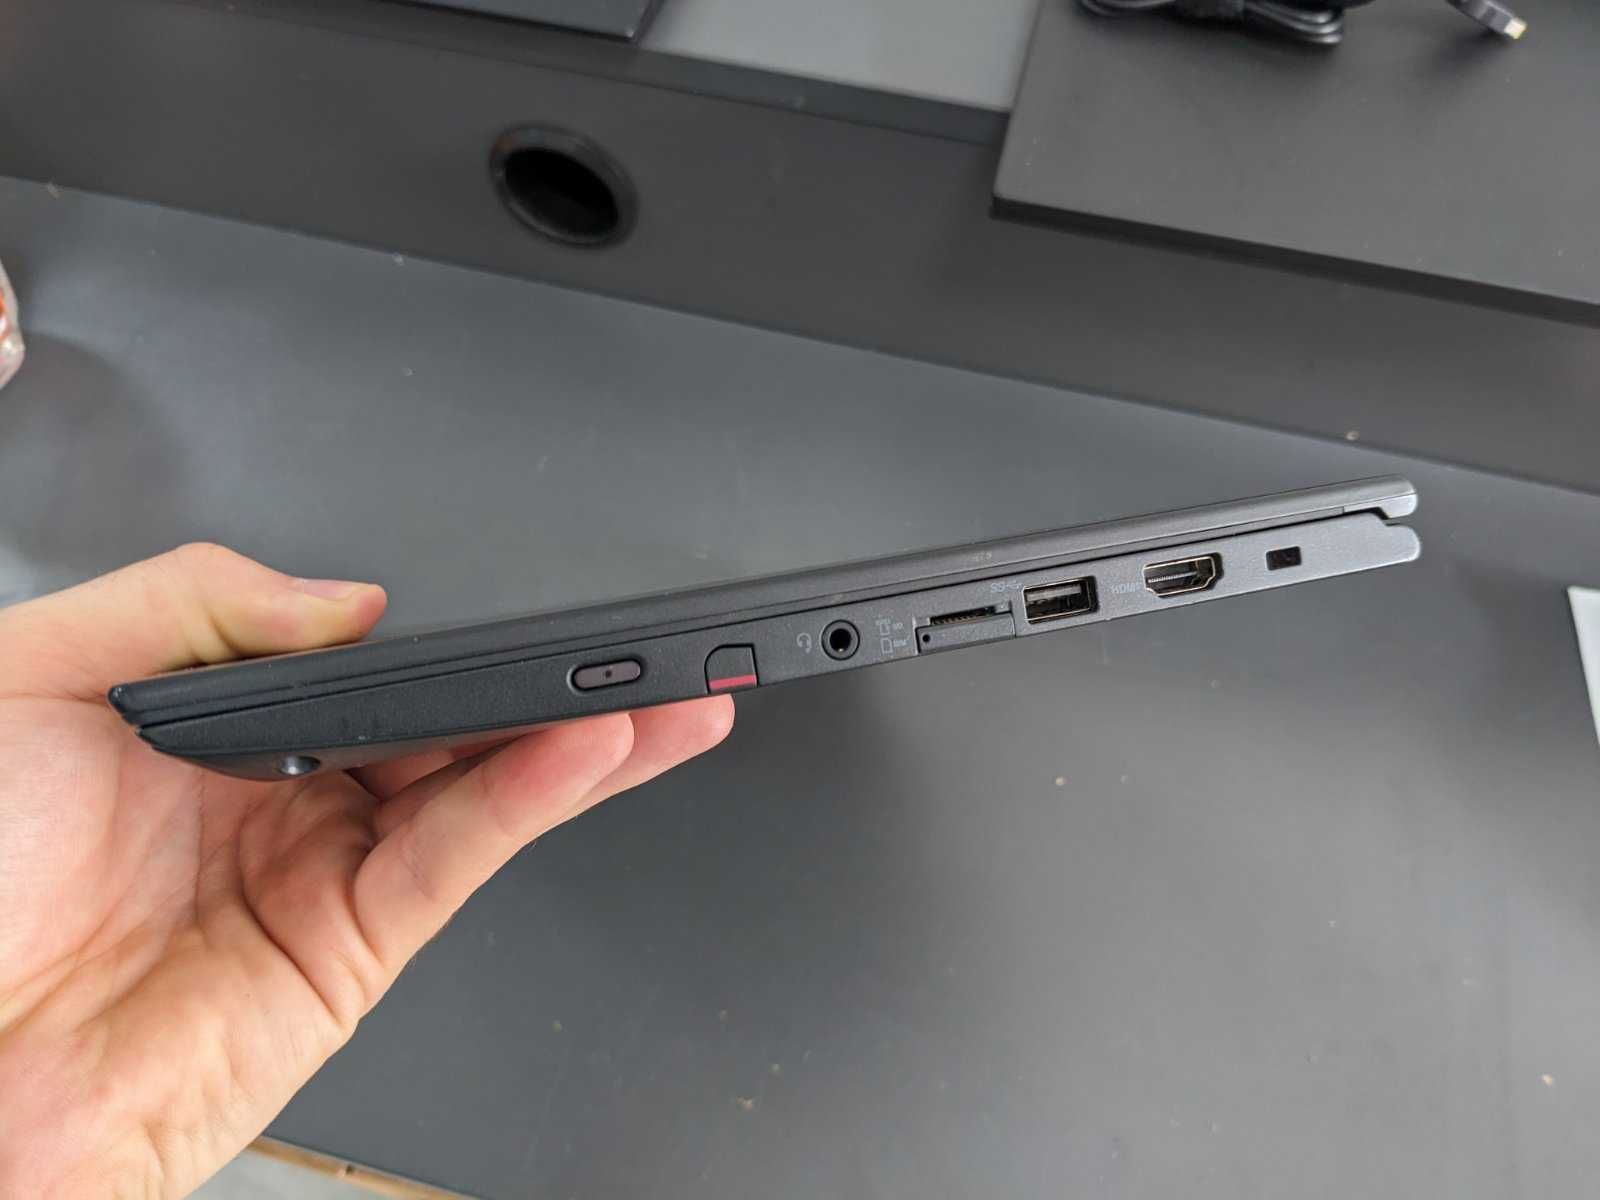 Lenovo ThinkPad Yoga 370-ноутбук на Intel Core i7-7500U/8 DDR4/256 ssd